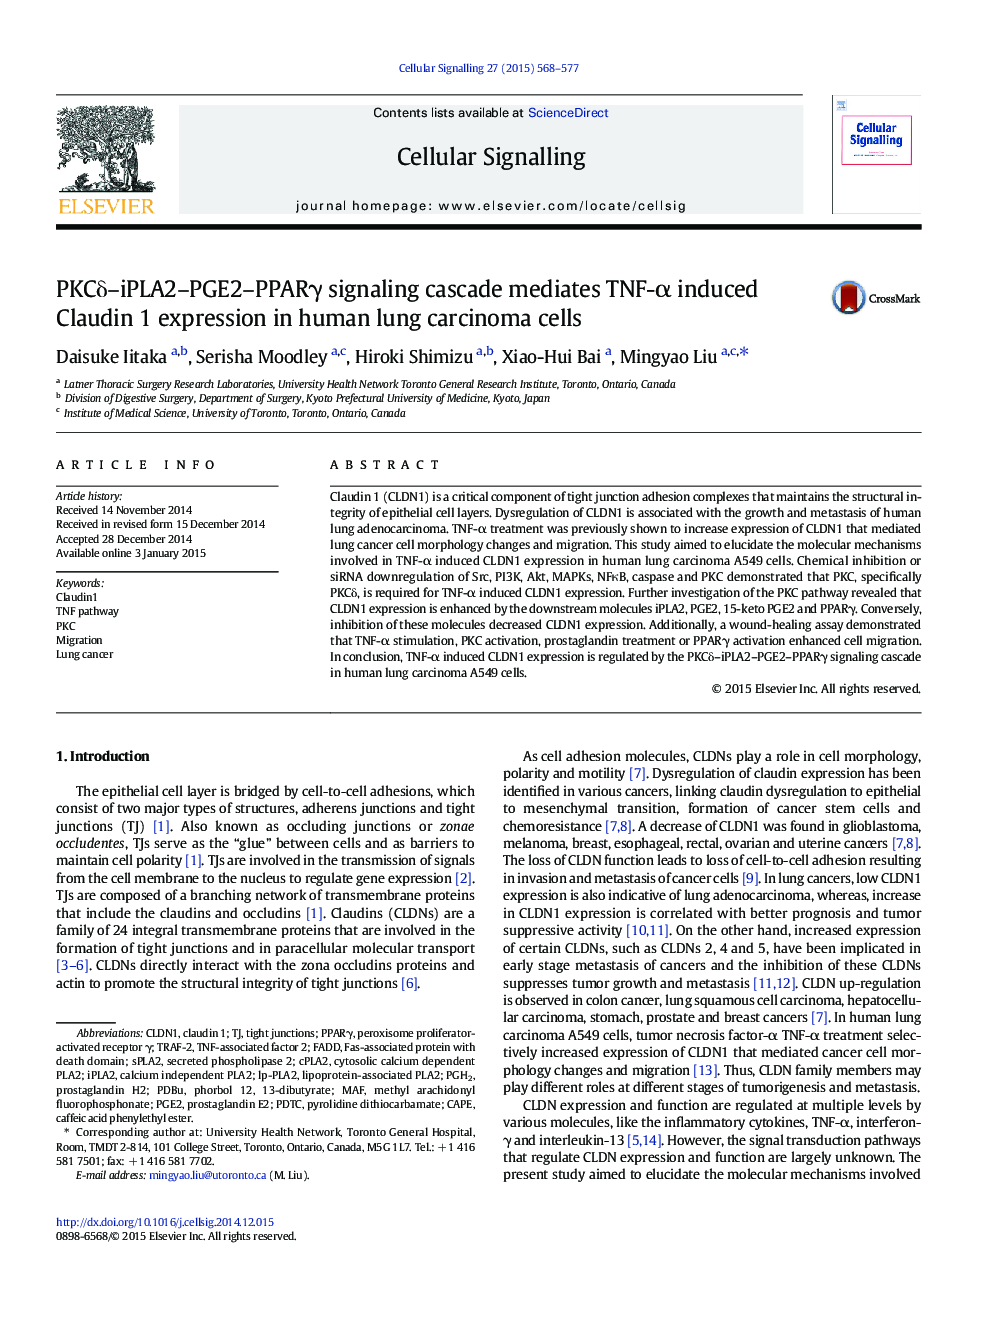 PKCÎ´-iPLA2-PGE2-PPARÎ³ signaling cascade mediates TNF-Î± induced Claudin 1 expression in human lung carcinoma cells